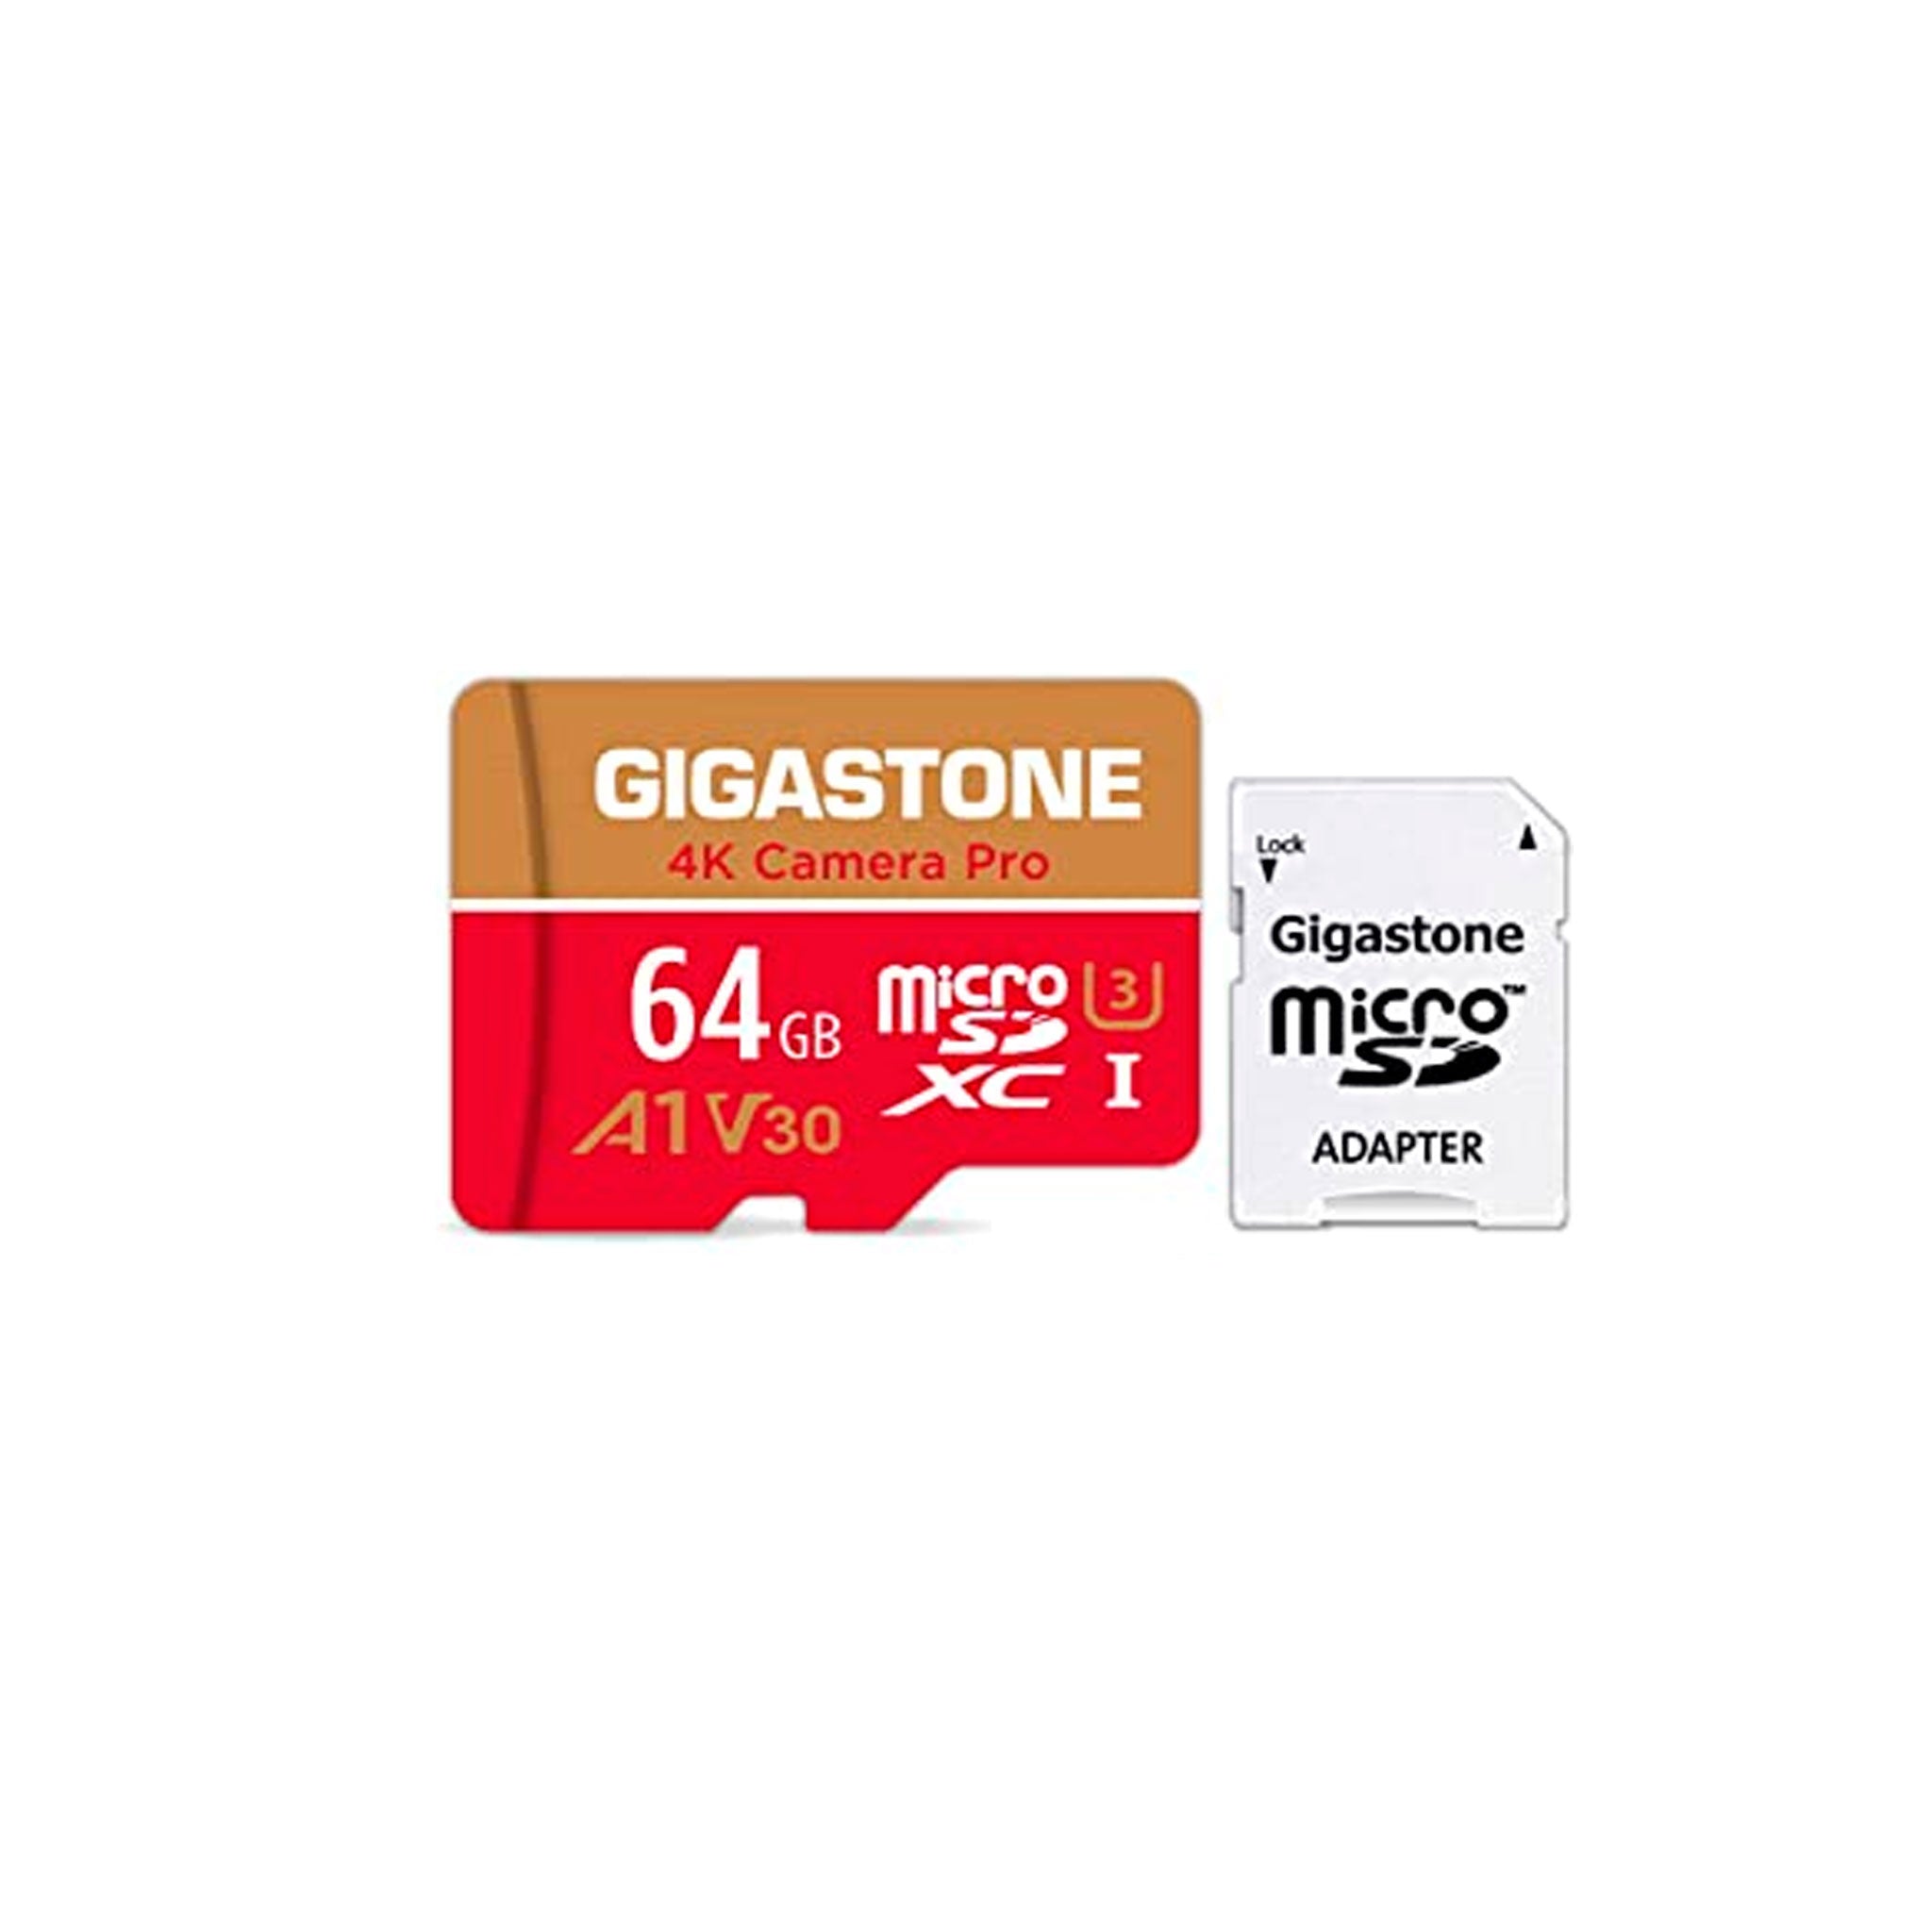 Gigastone - Microsdhc Memory Card 64gb